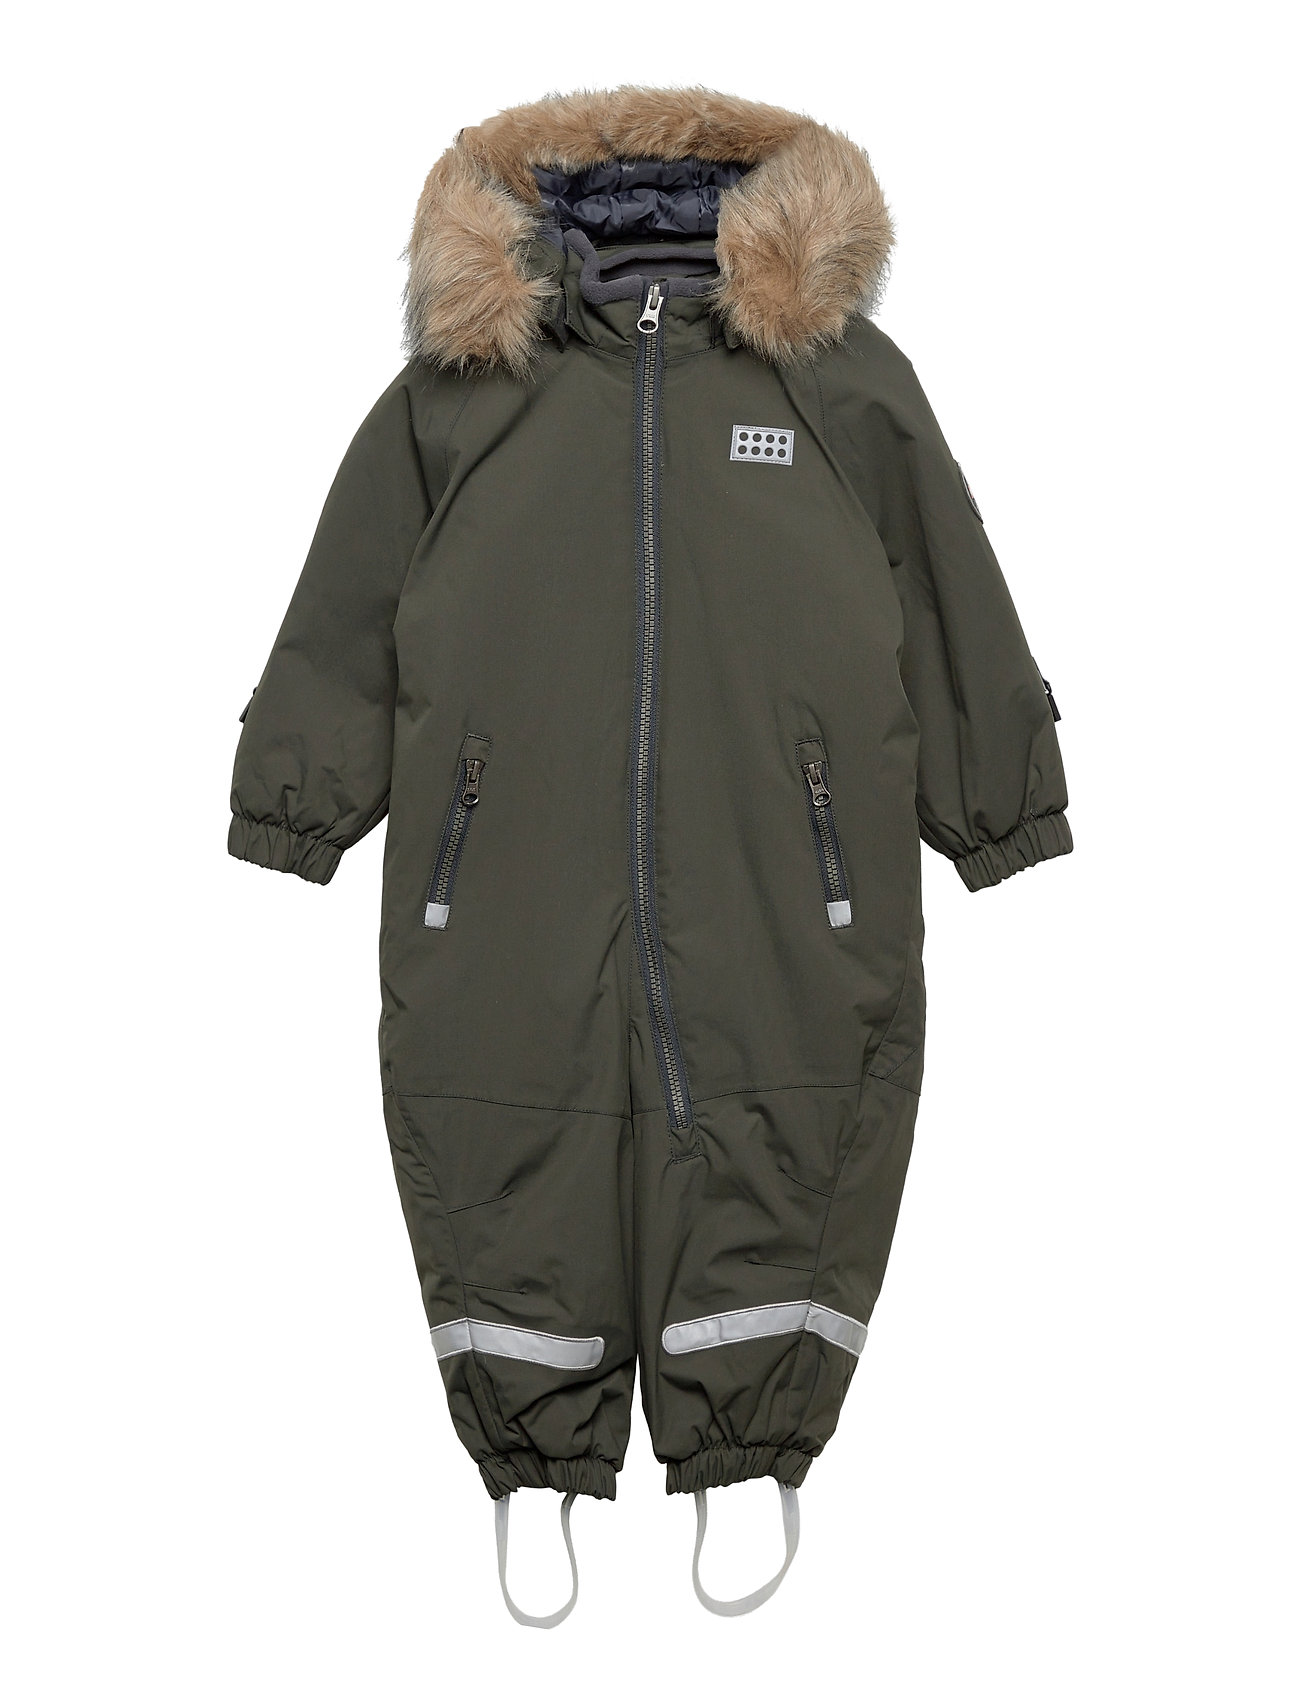 Lwjunin 706 - Snowsuit Outerwear Snow/ski Clothing Snow/ski Suits & Sets Ruskea Lego Wear, Lego wear